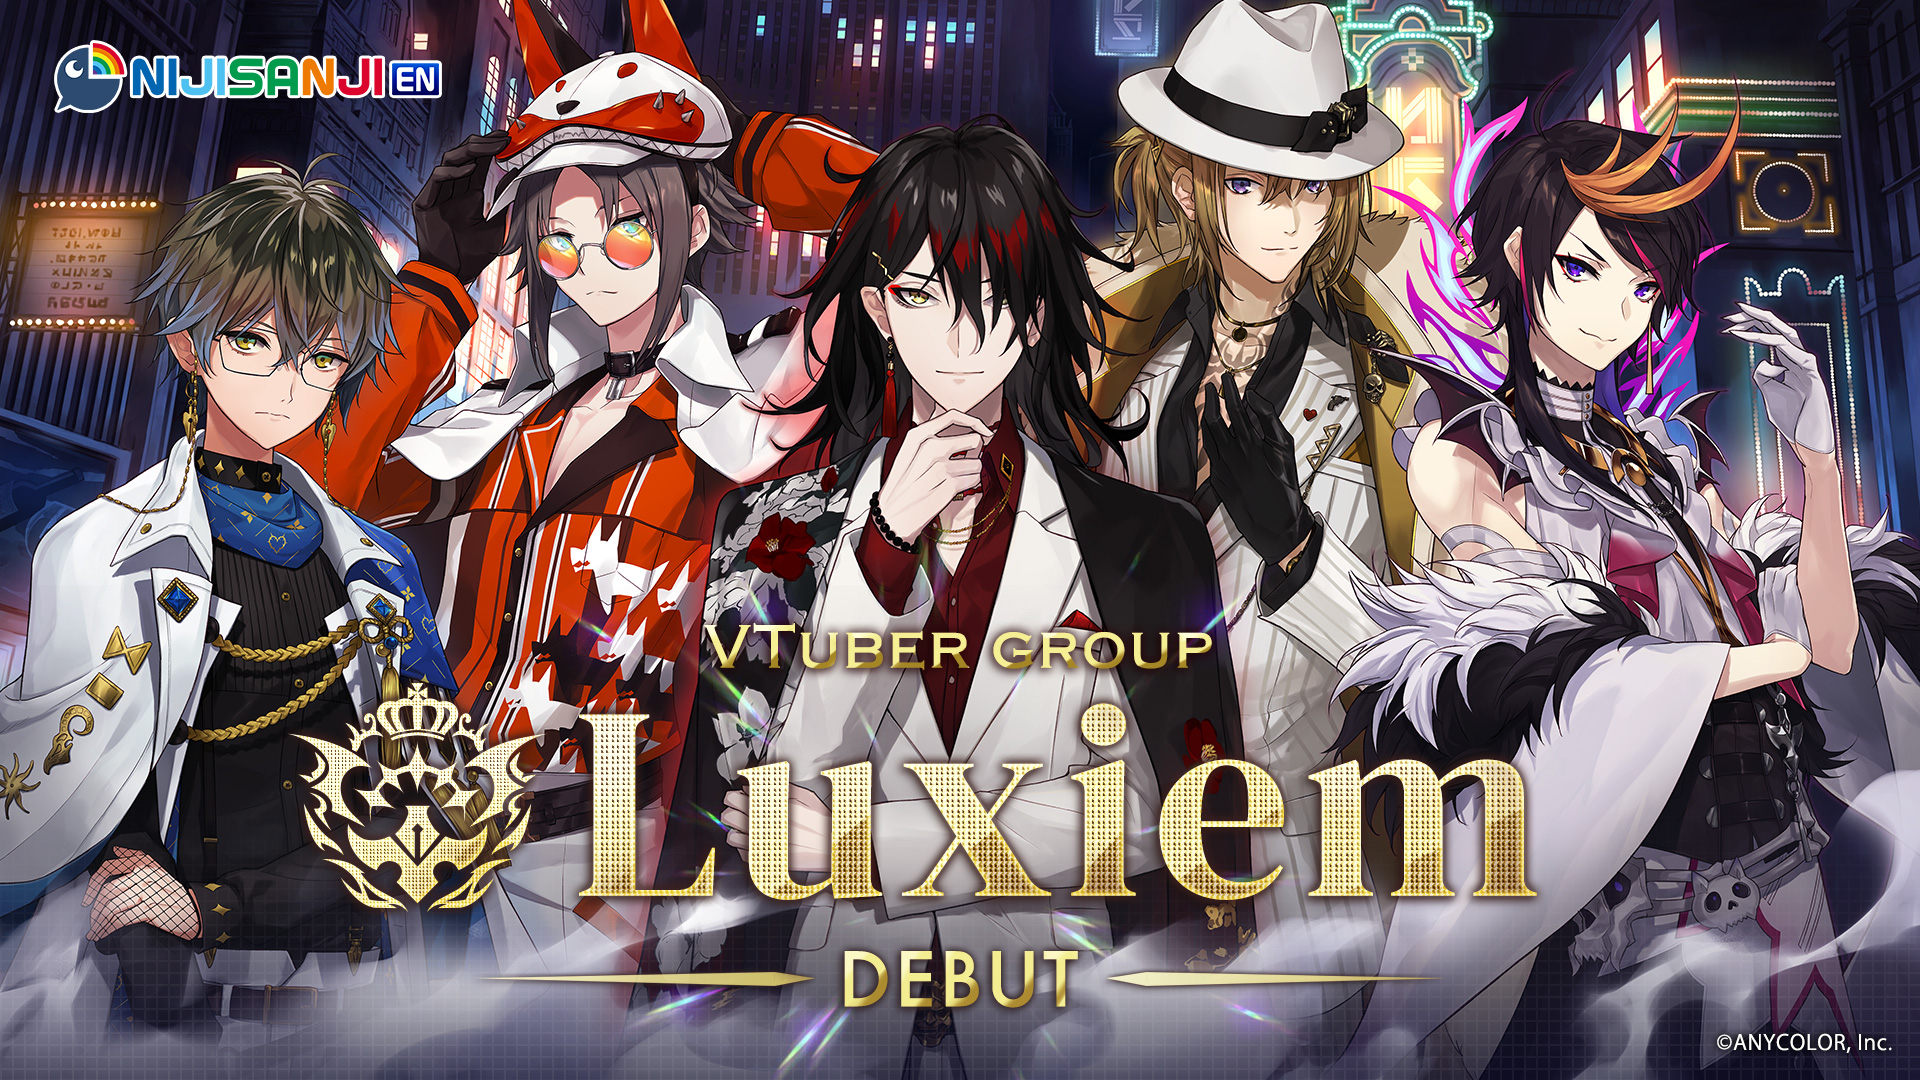 From NIJISANJI EN: VTuber Group “Luxiem” Debut Announcement 